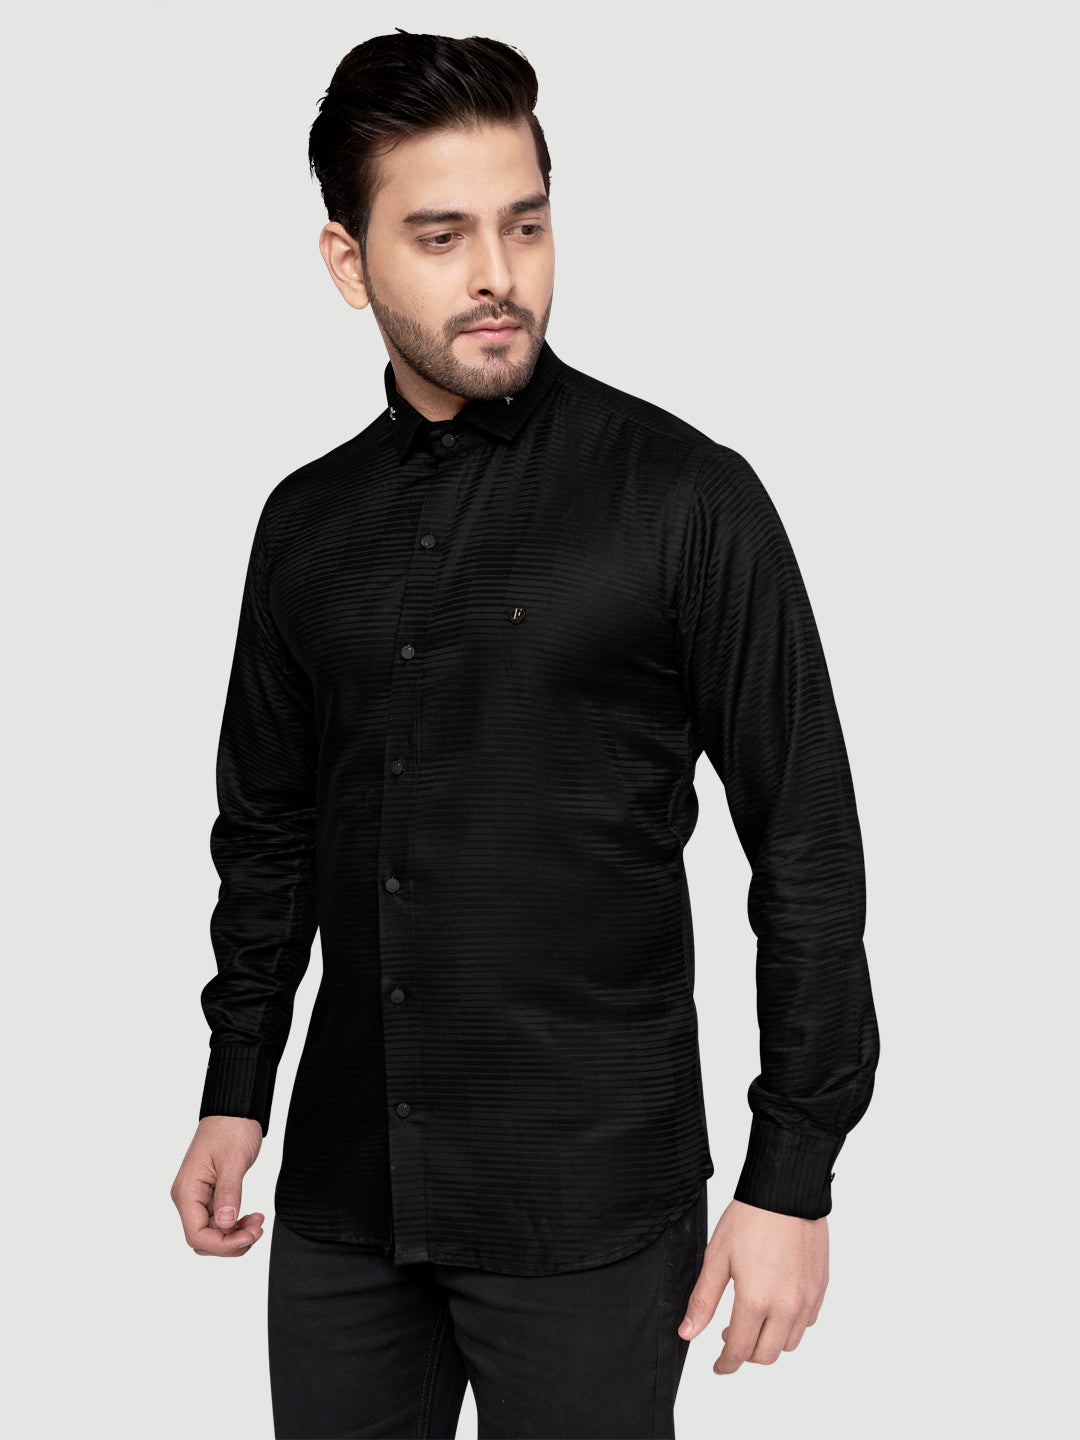 Black and White Shirts Designer Shimmer Shirt with Metal Broach Black